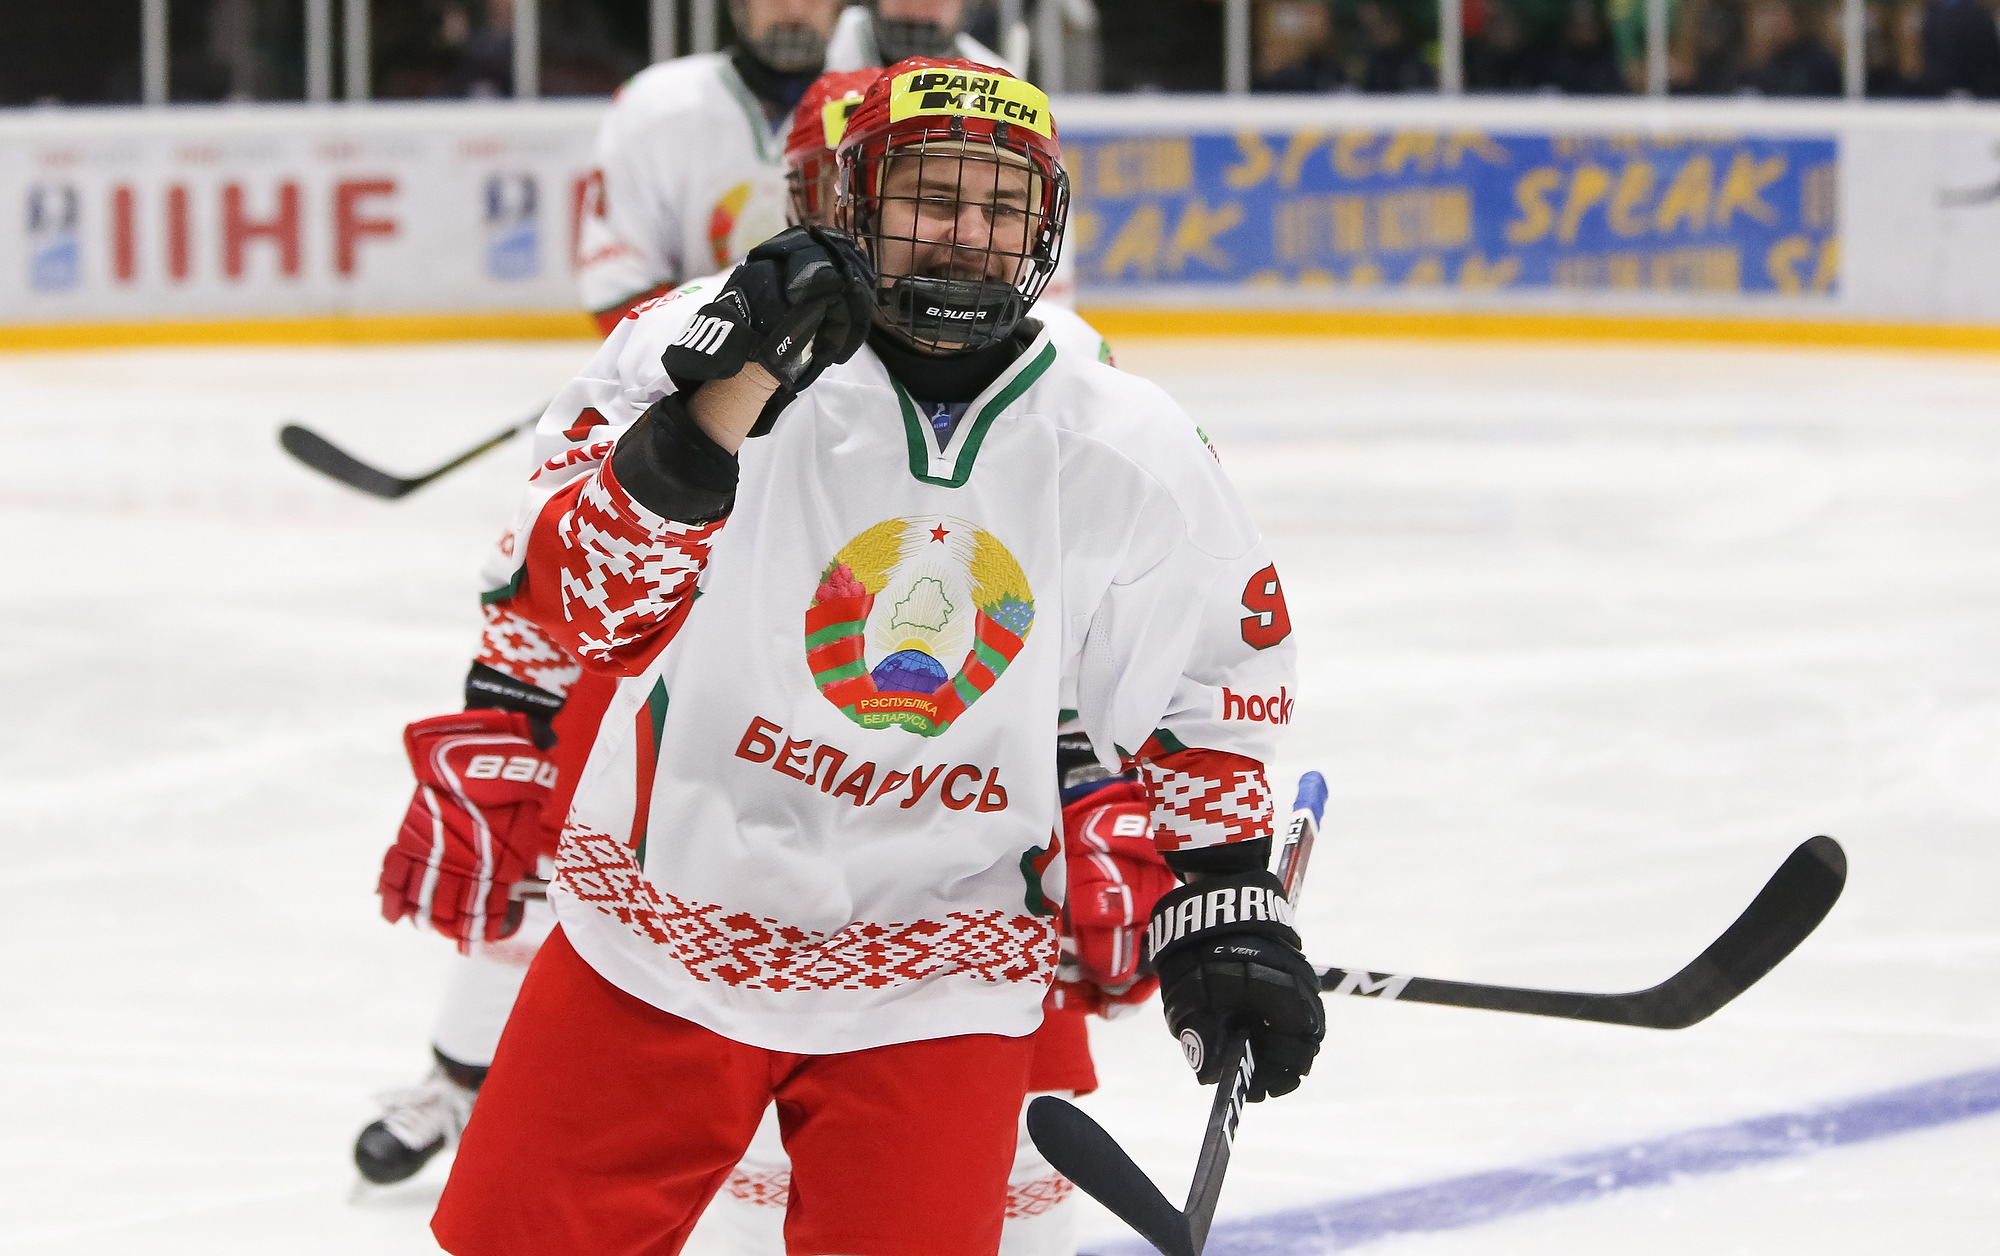 czech republic hockey jersey 2019